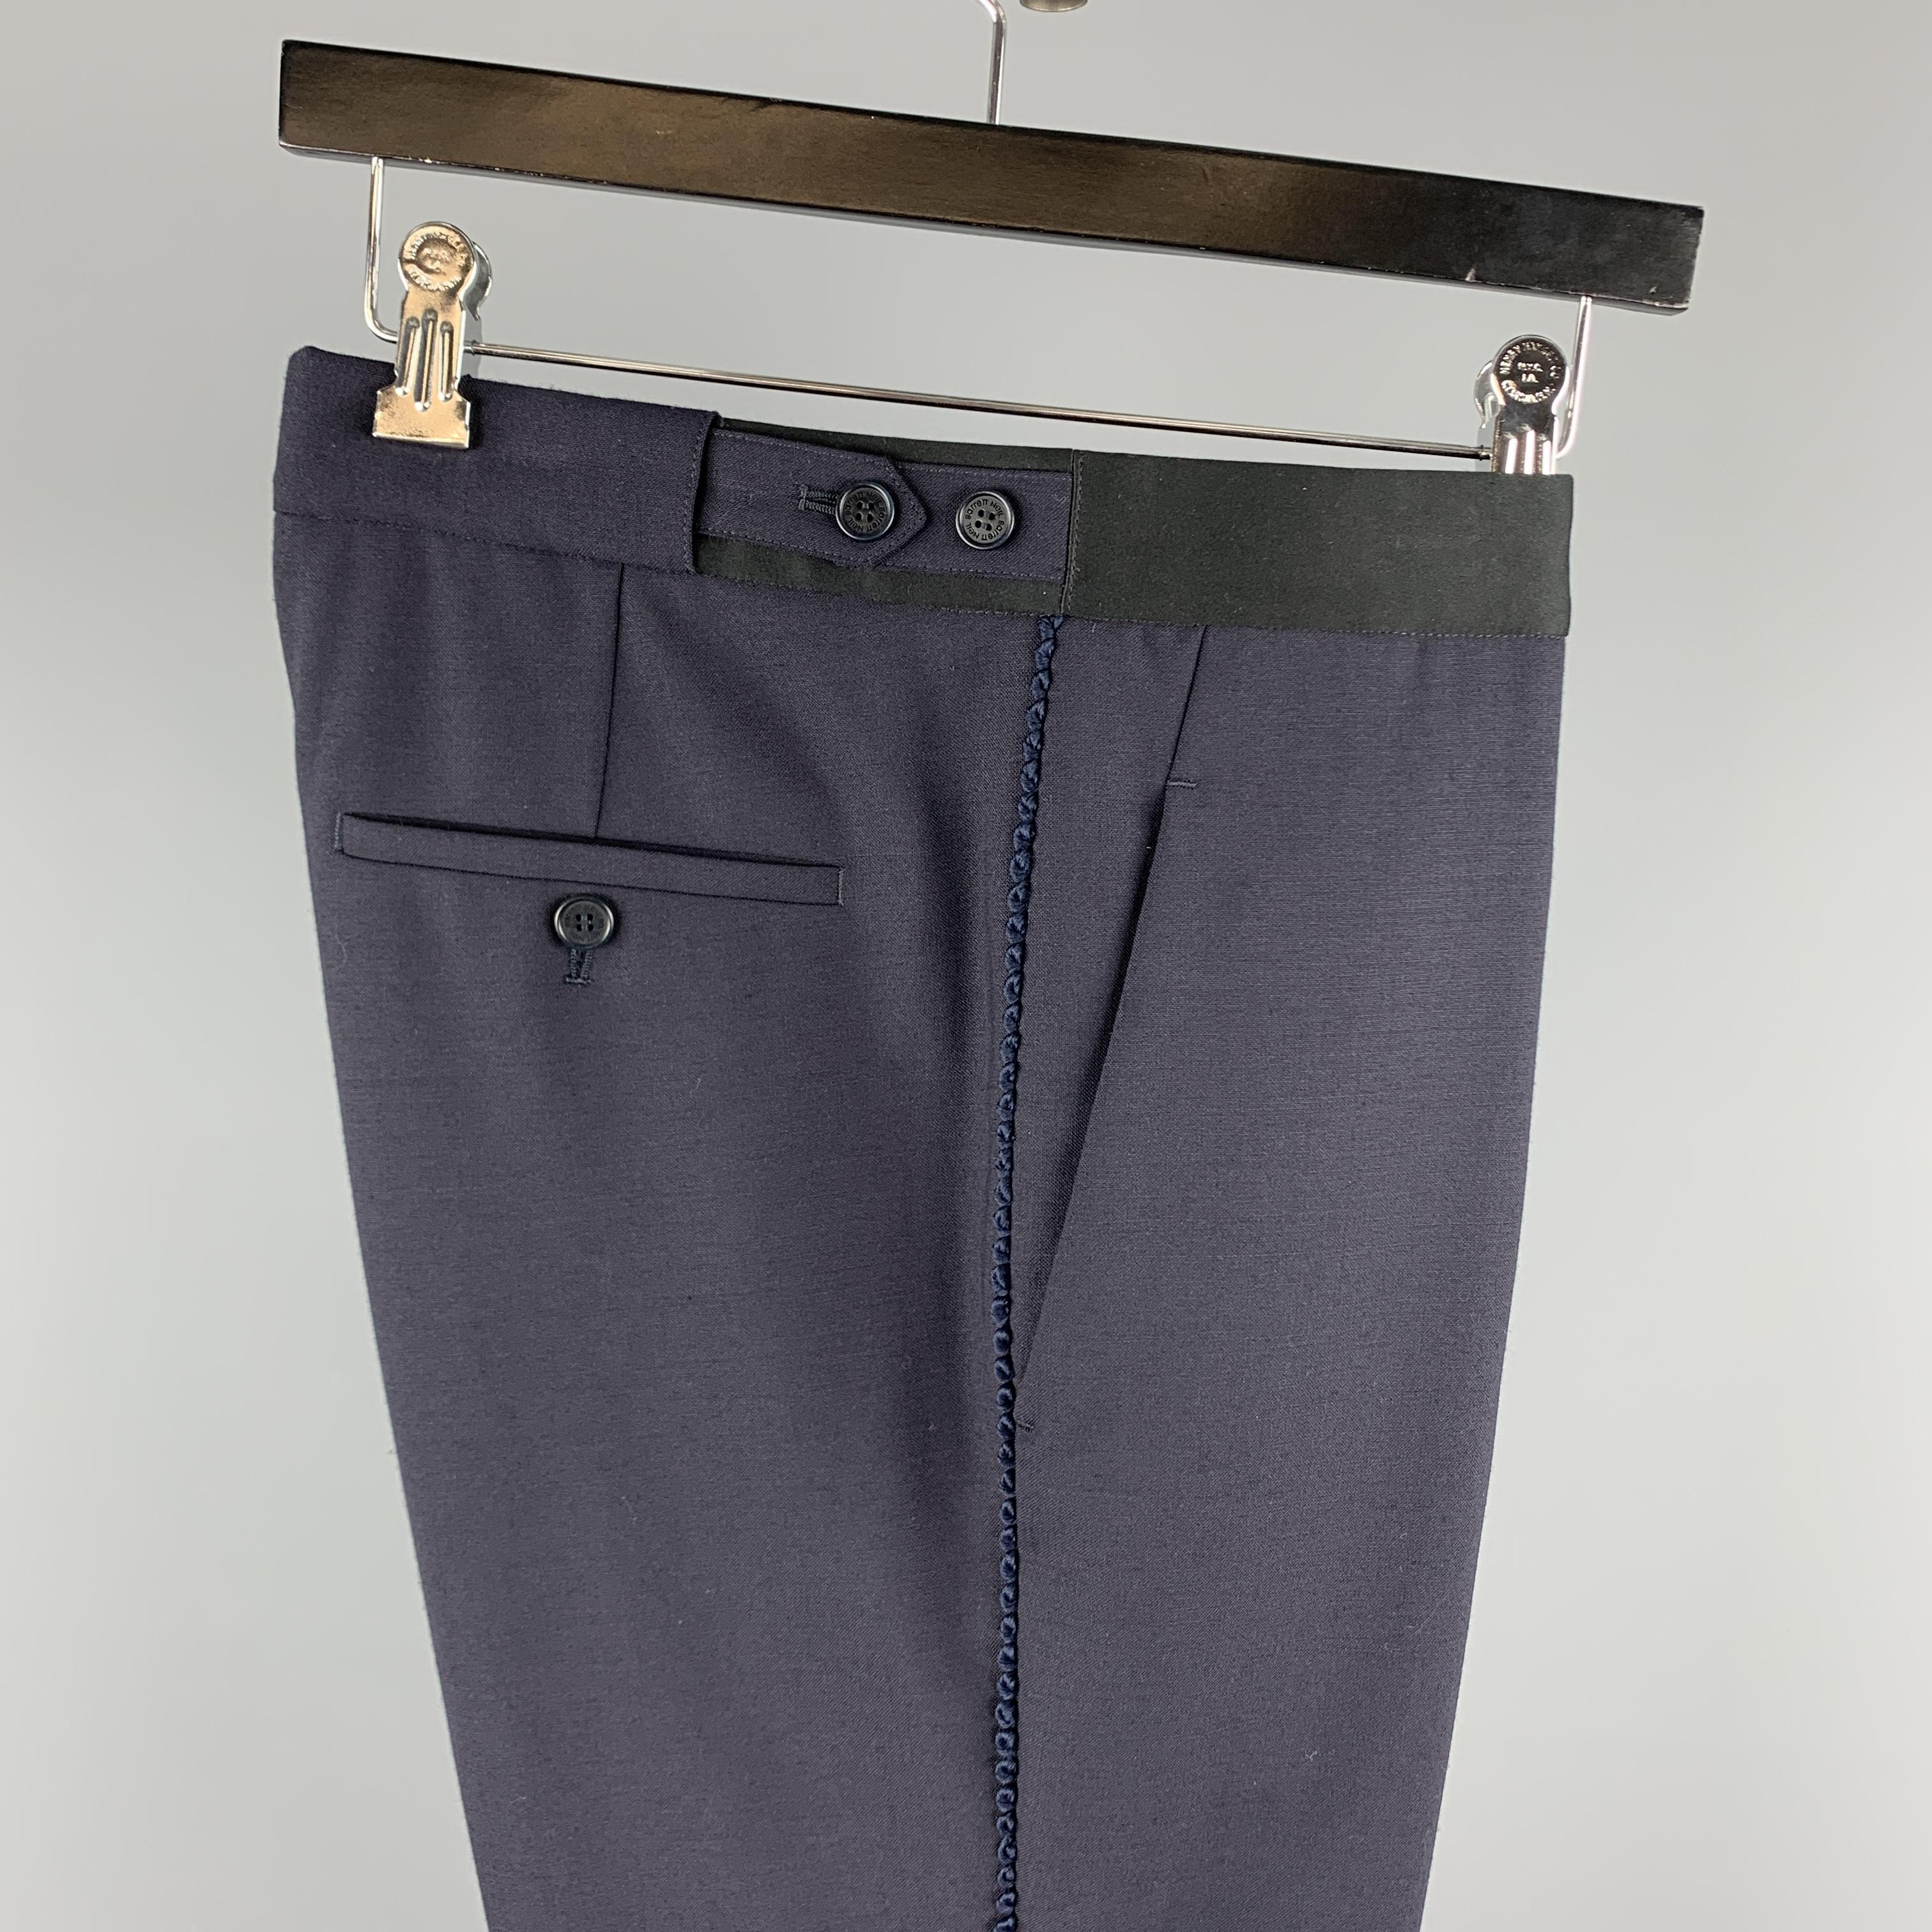 NEIL BARRETT S/S 18 Size 32 Navy Wool Blend Tuxedo Dress Pants 1